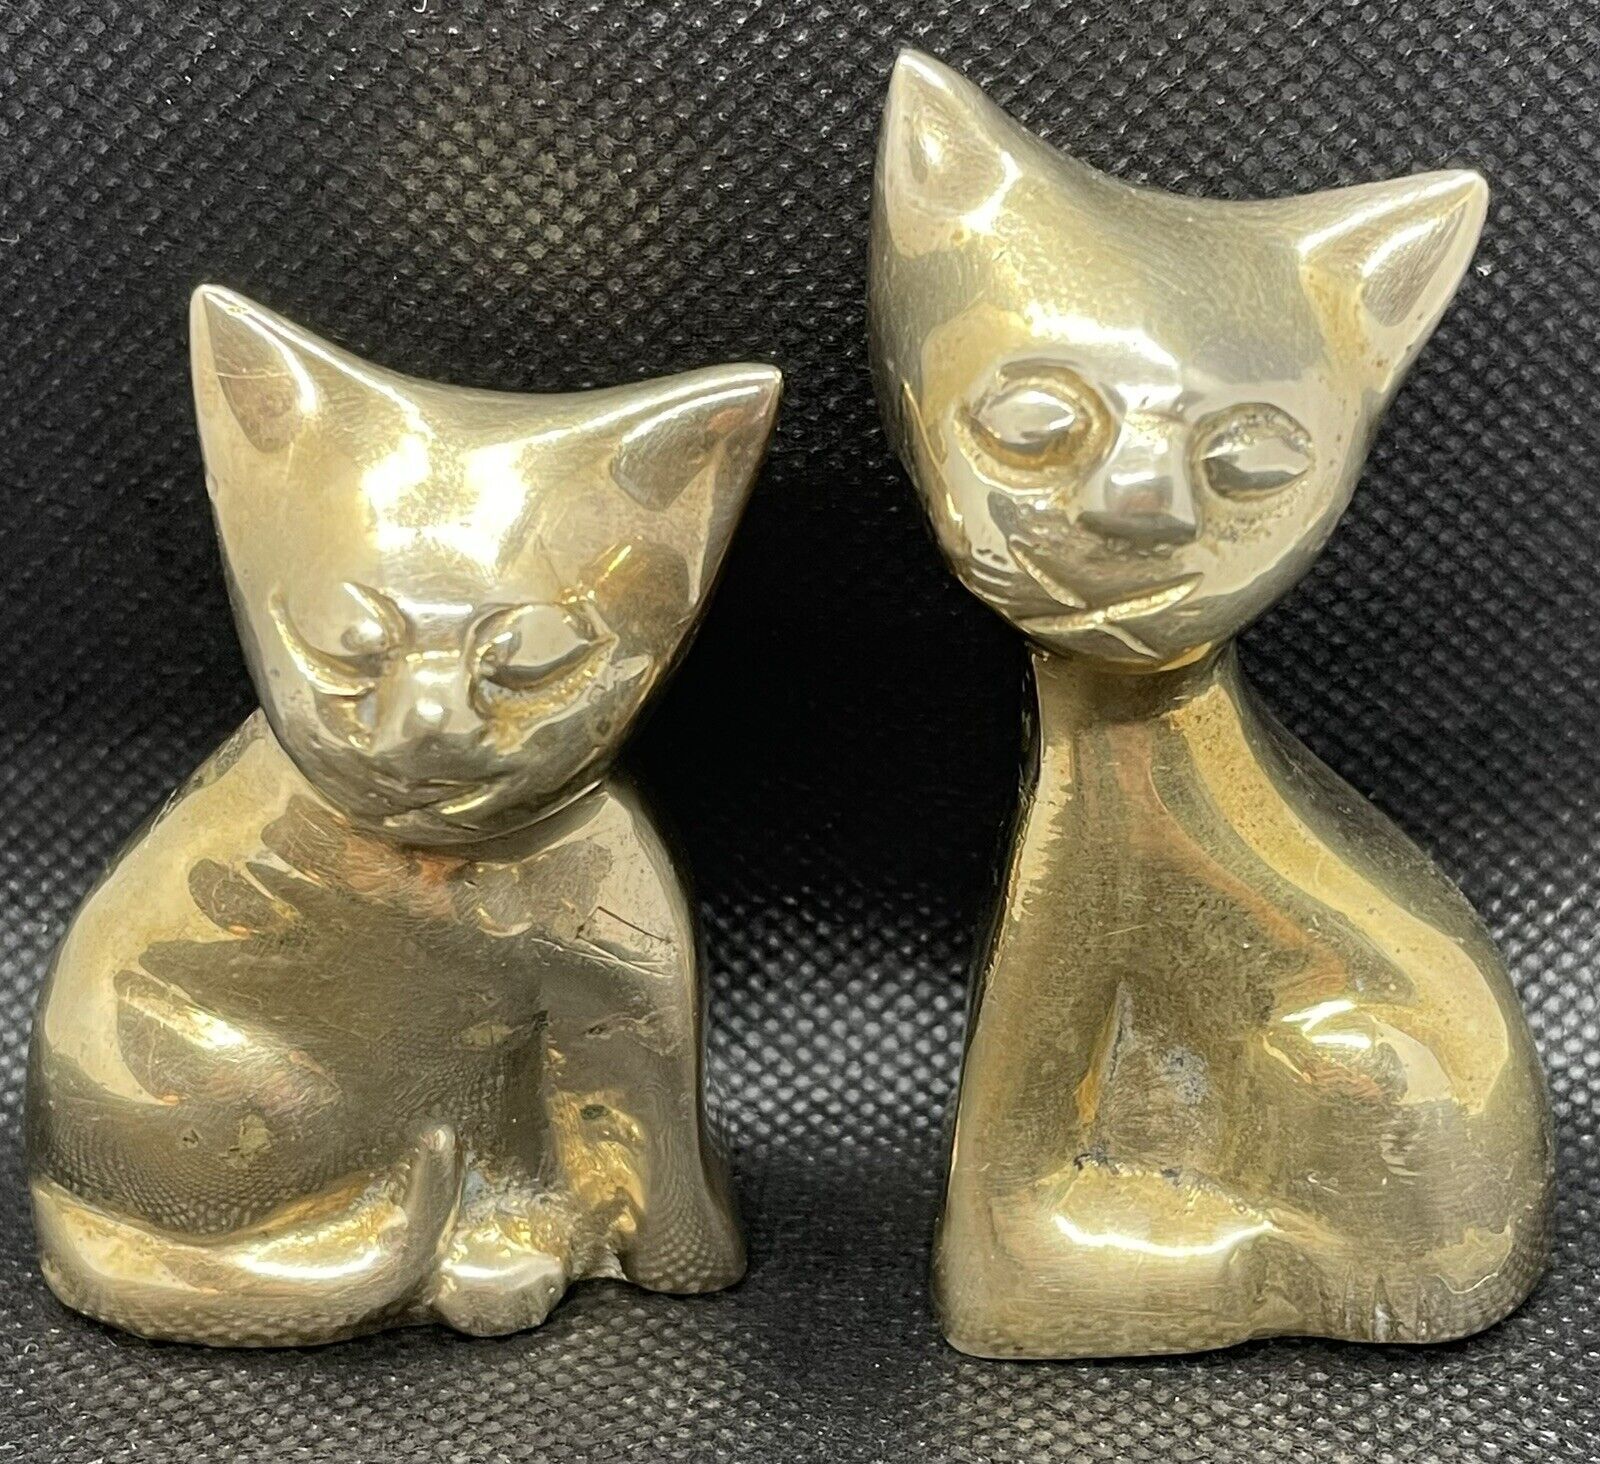  Mid-Century Modern Solid Brass Sitting Cat Figurines - Set of 2